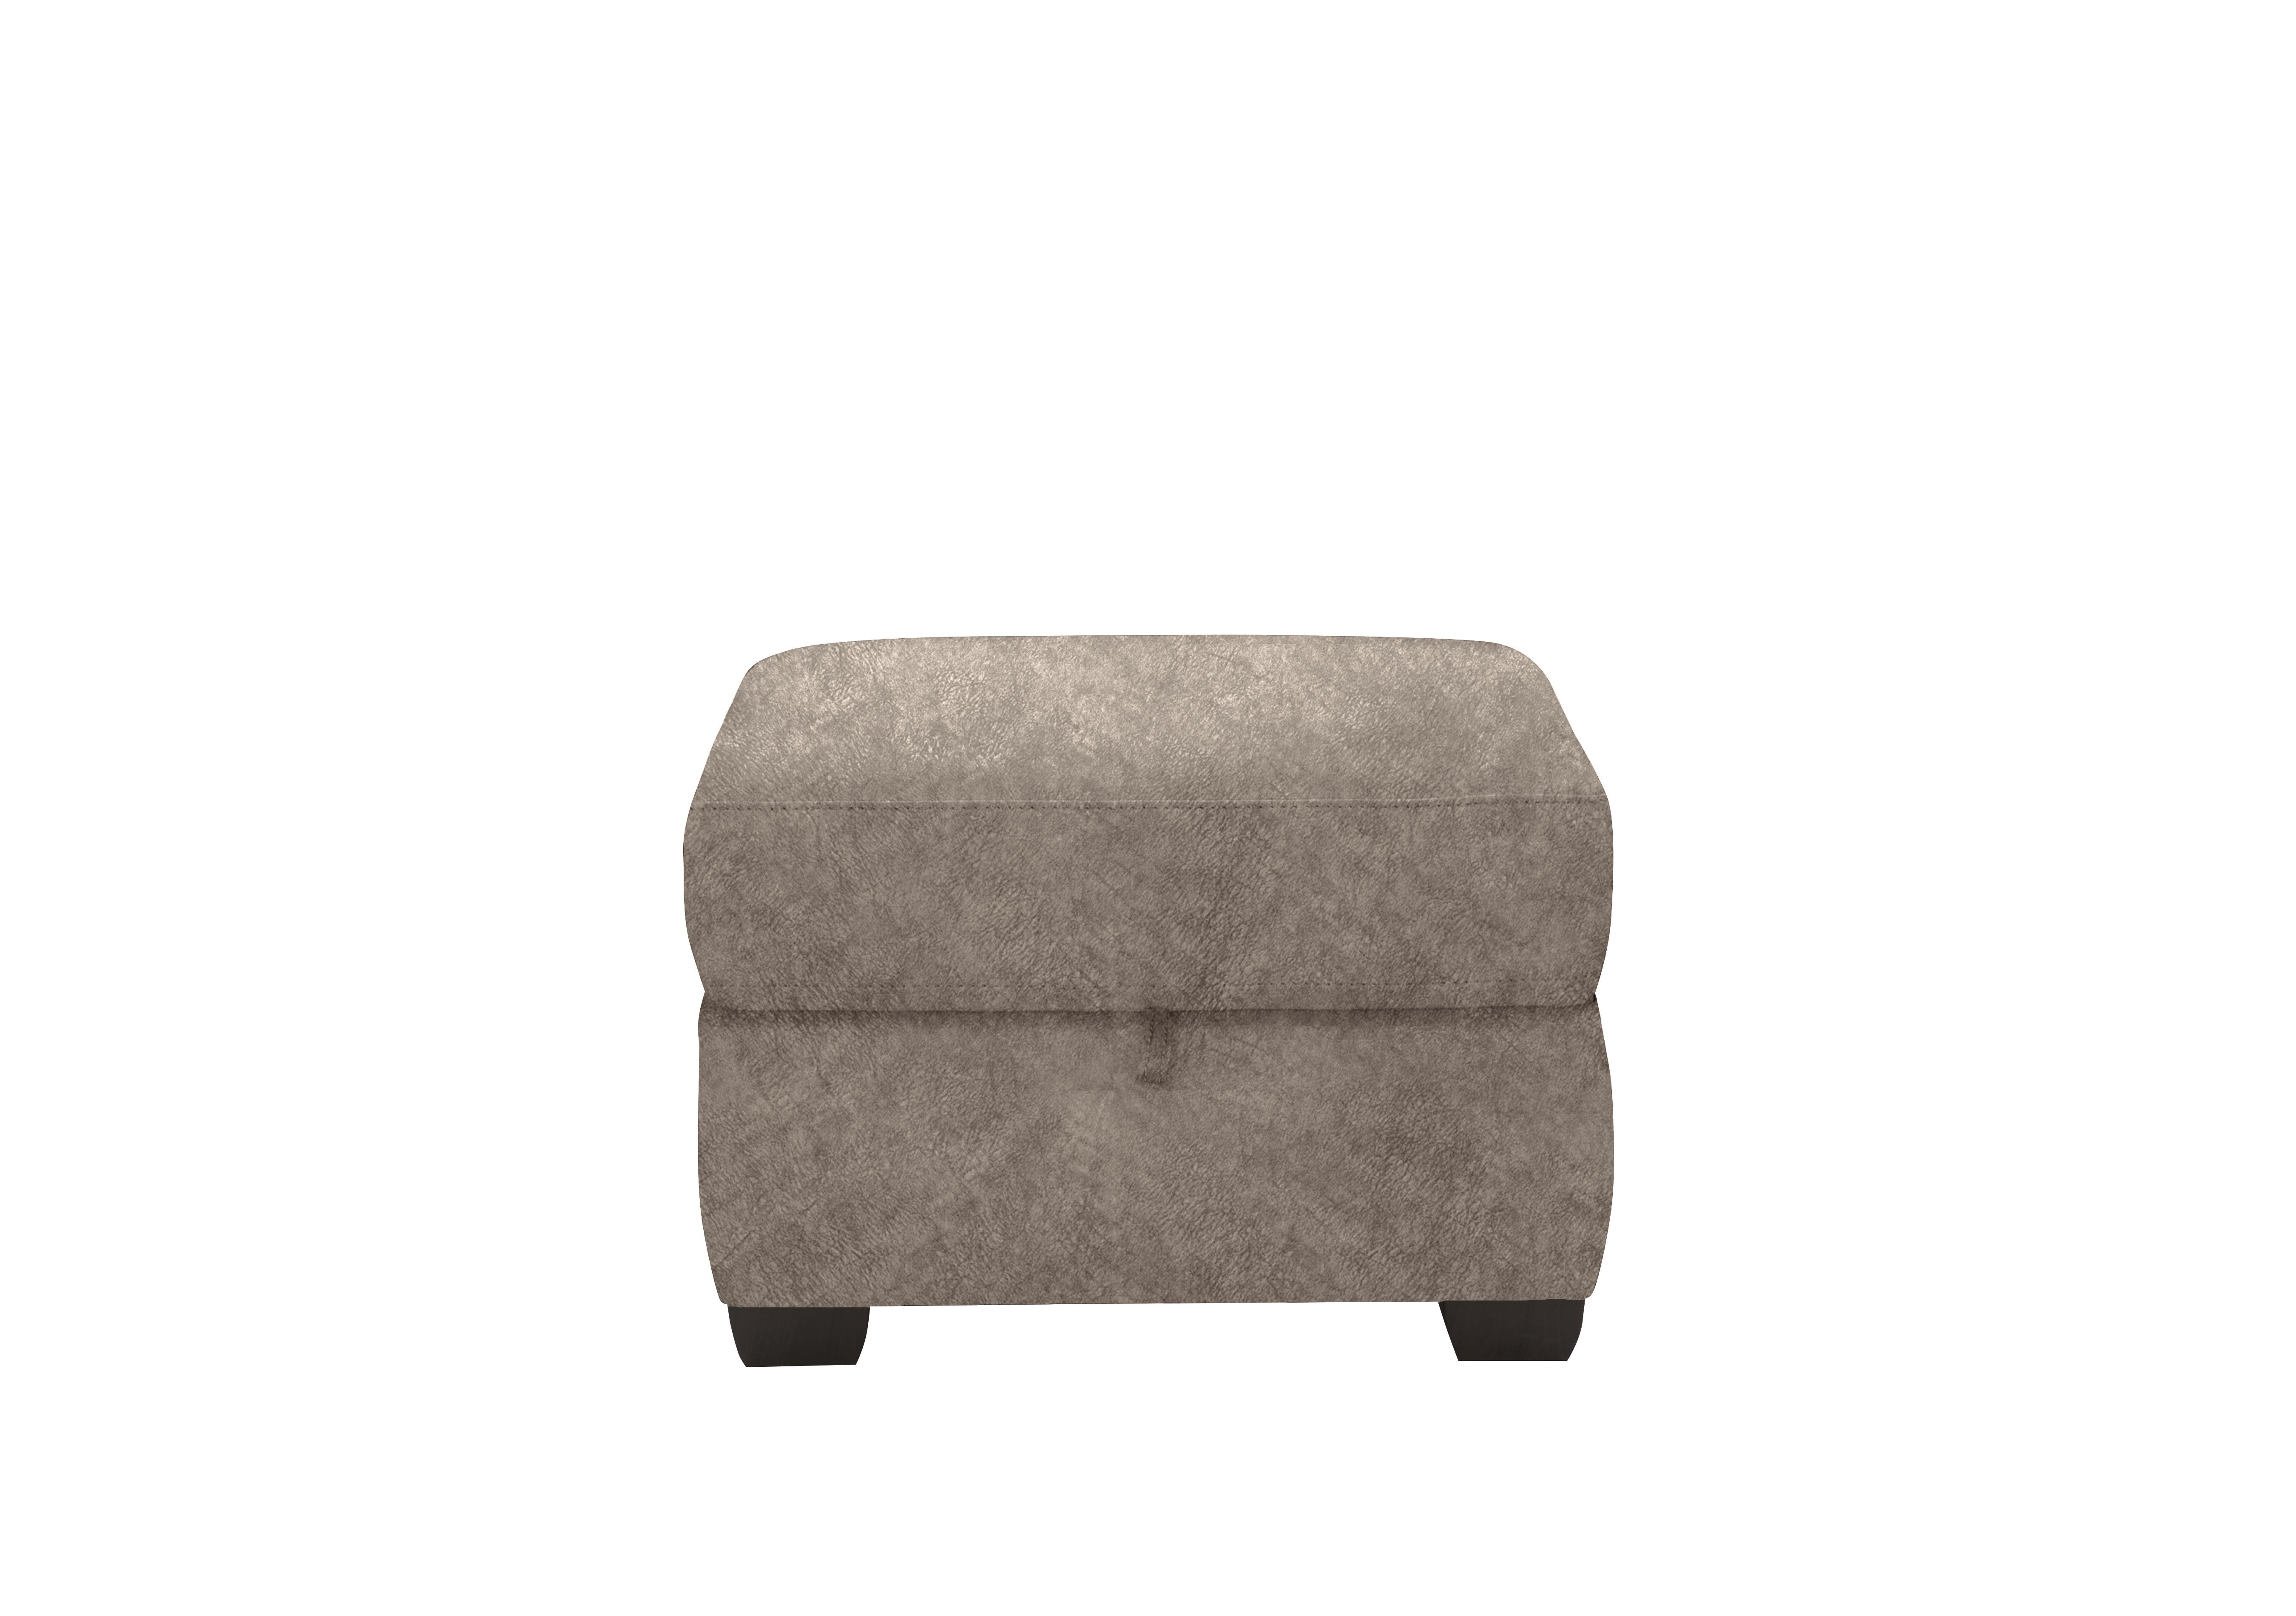 Optimus Fabric Storage Footstool in Bfa-Bnn-R29 Fv1 Mink on Furniture Village